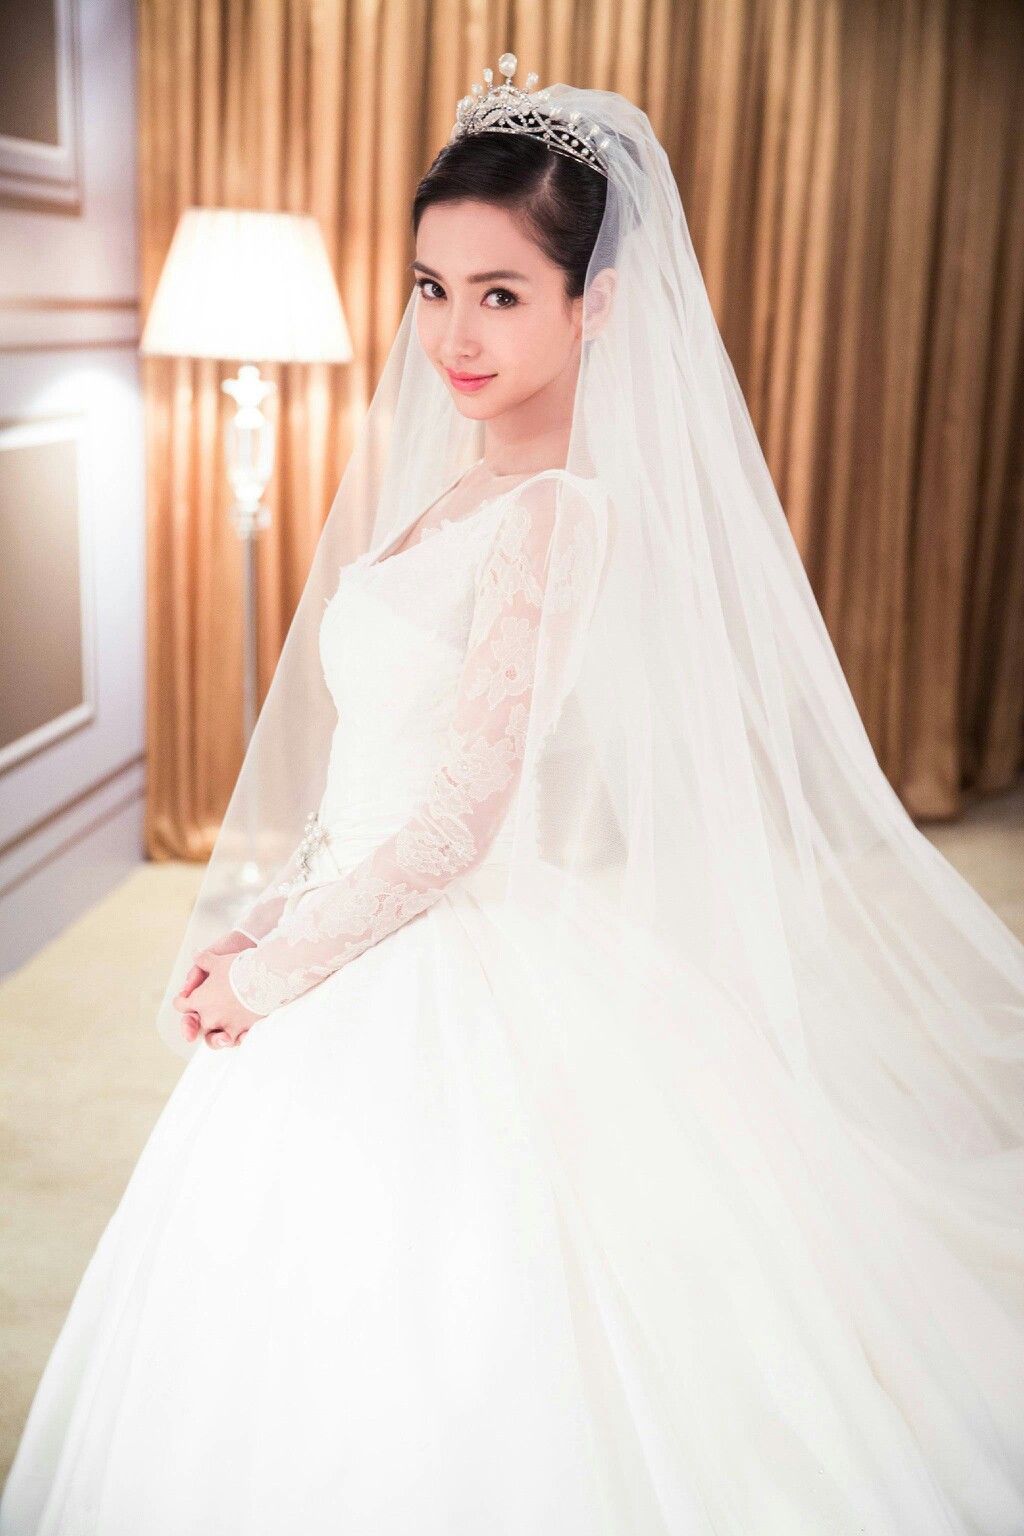 Angelababy and Huang Ziaoming's Wedding Photos (October 2015)